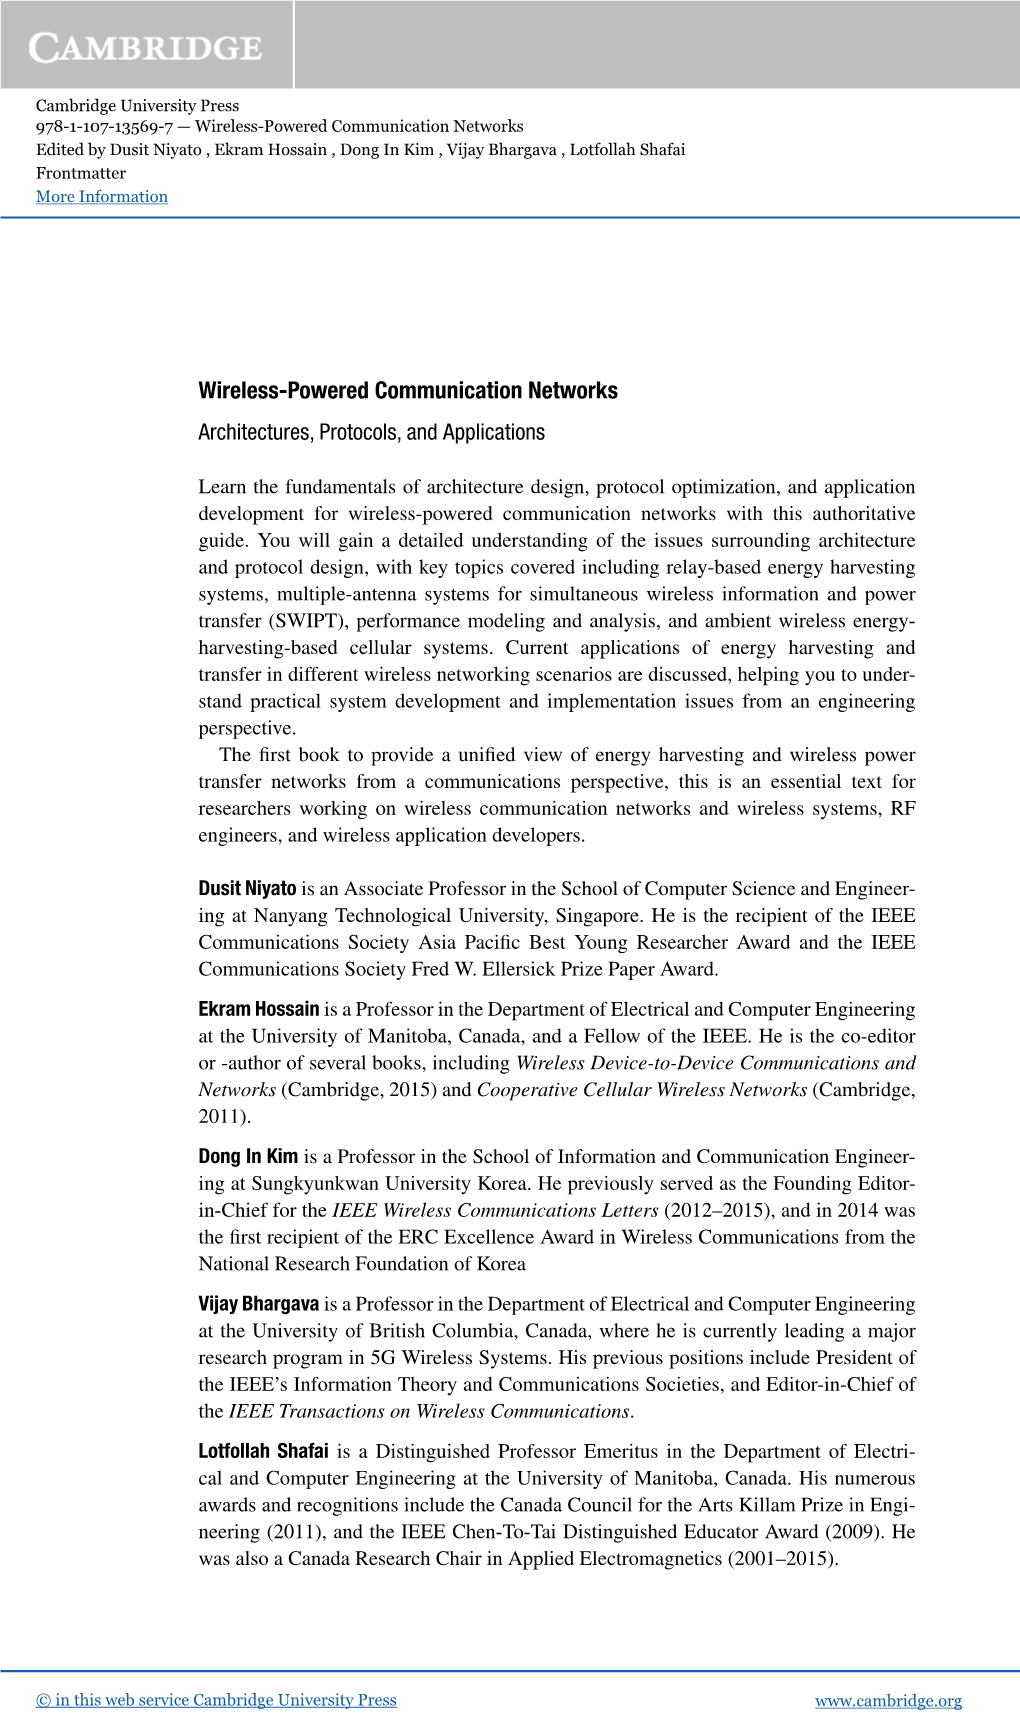 Wireless-Powered Communication Networks Edited by Dusit Niyato , Ekram Hossain , Dong in Kim , Vijay Bhargava , Lotfollah Shafai Frontmatter More Information